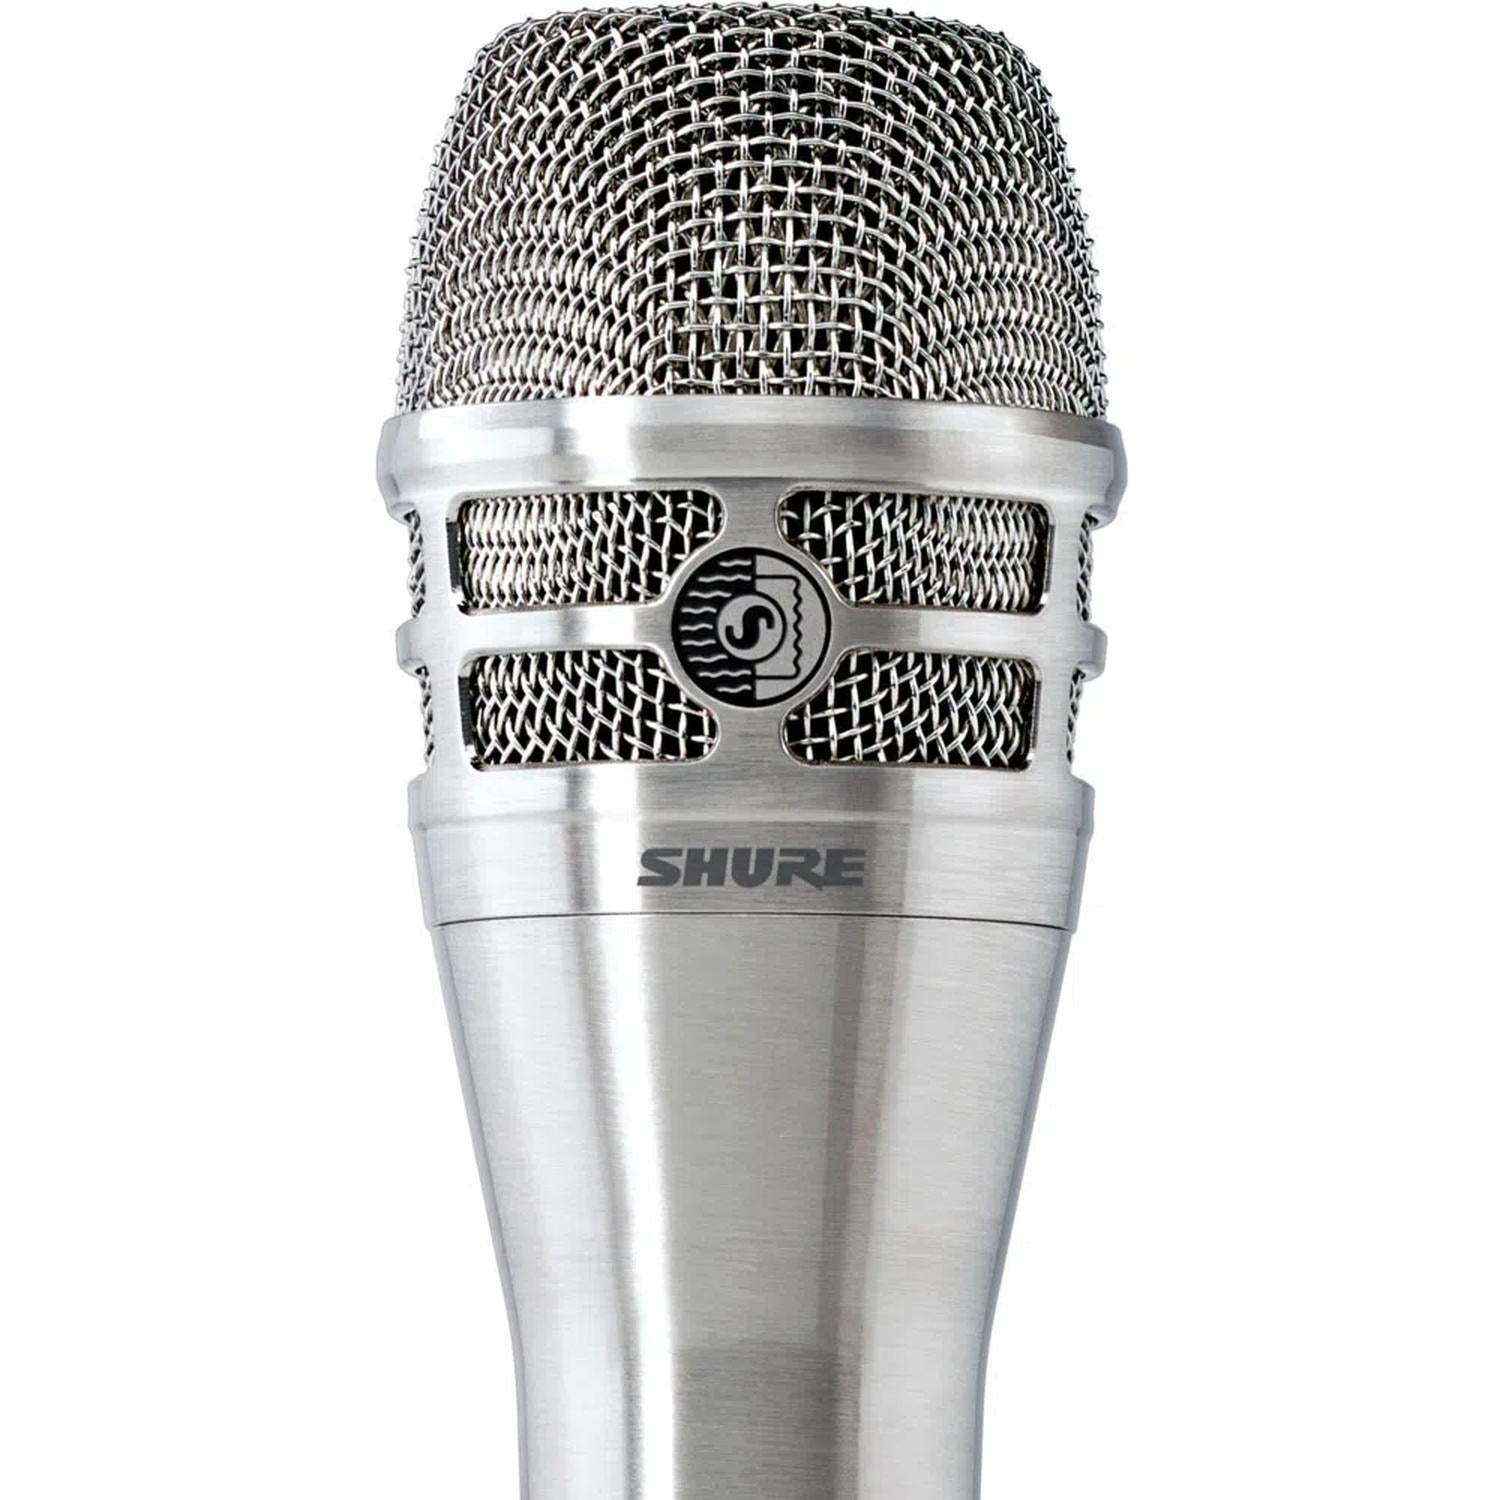 Shure Microfono dinamico cardiode niquel Ksm58-n